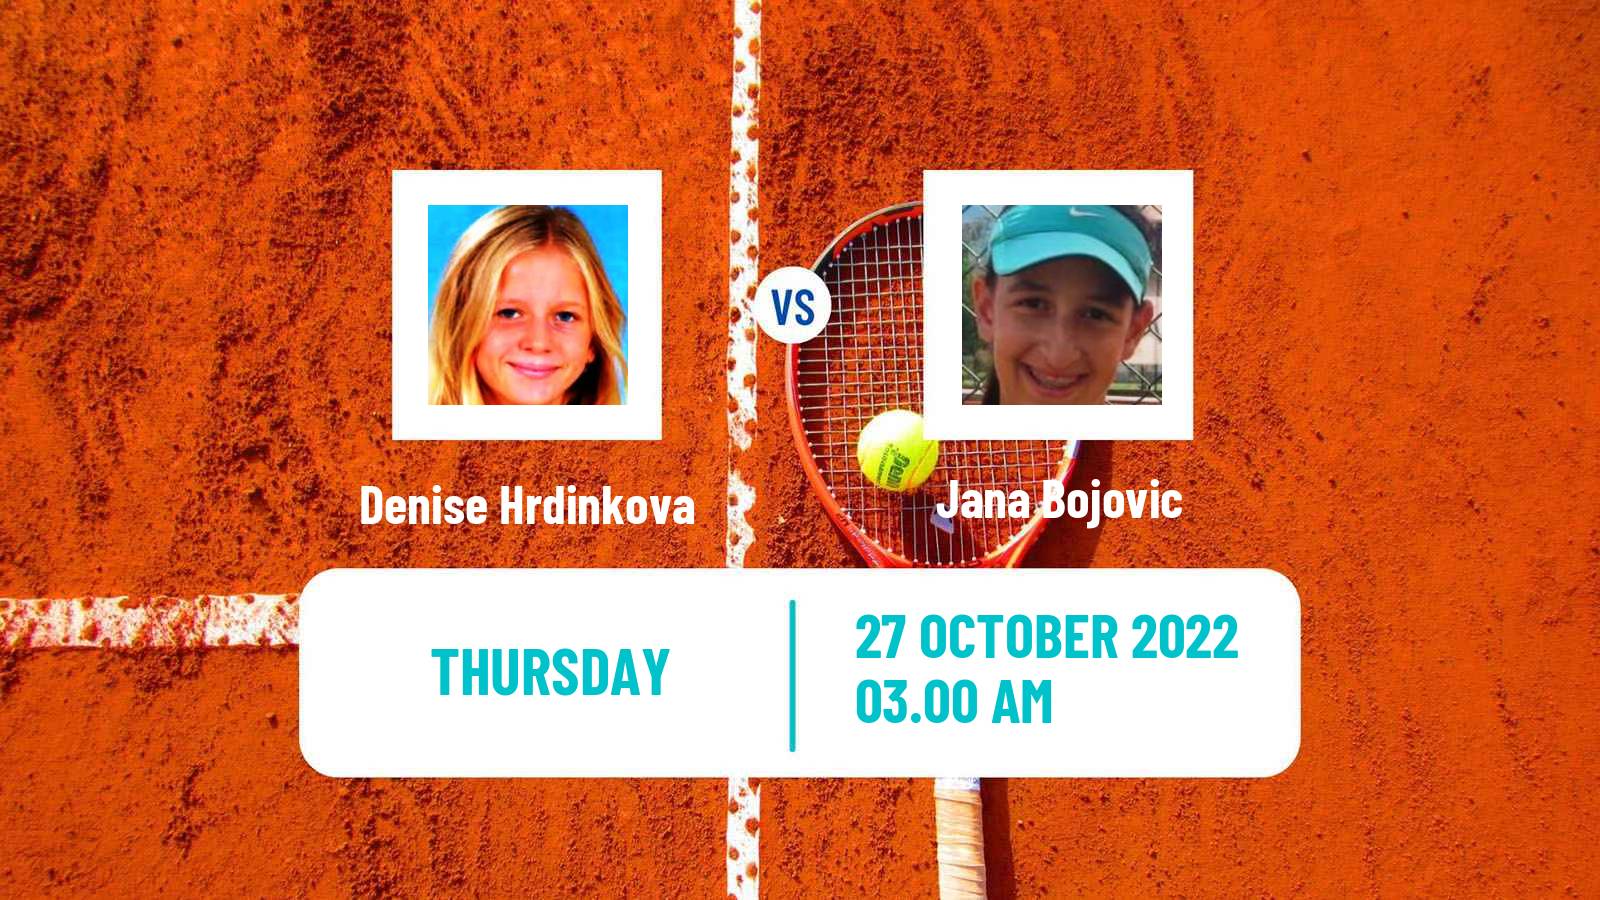 Tennis ITF Tournaments Denise Hrdinkova - Jana Bojovic